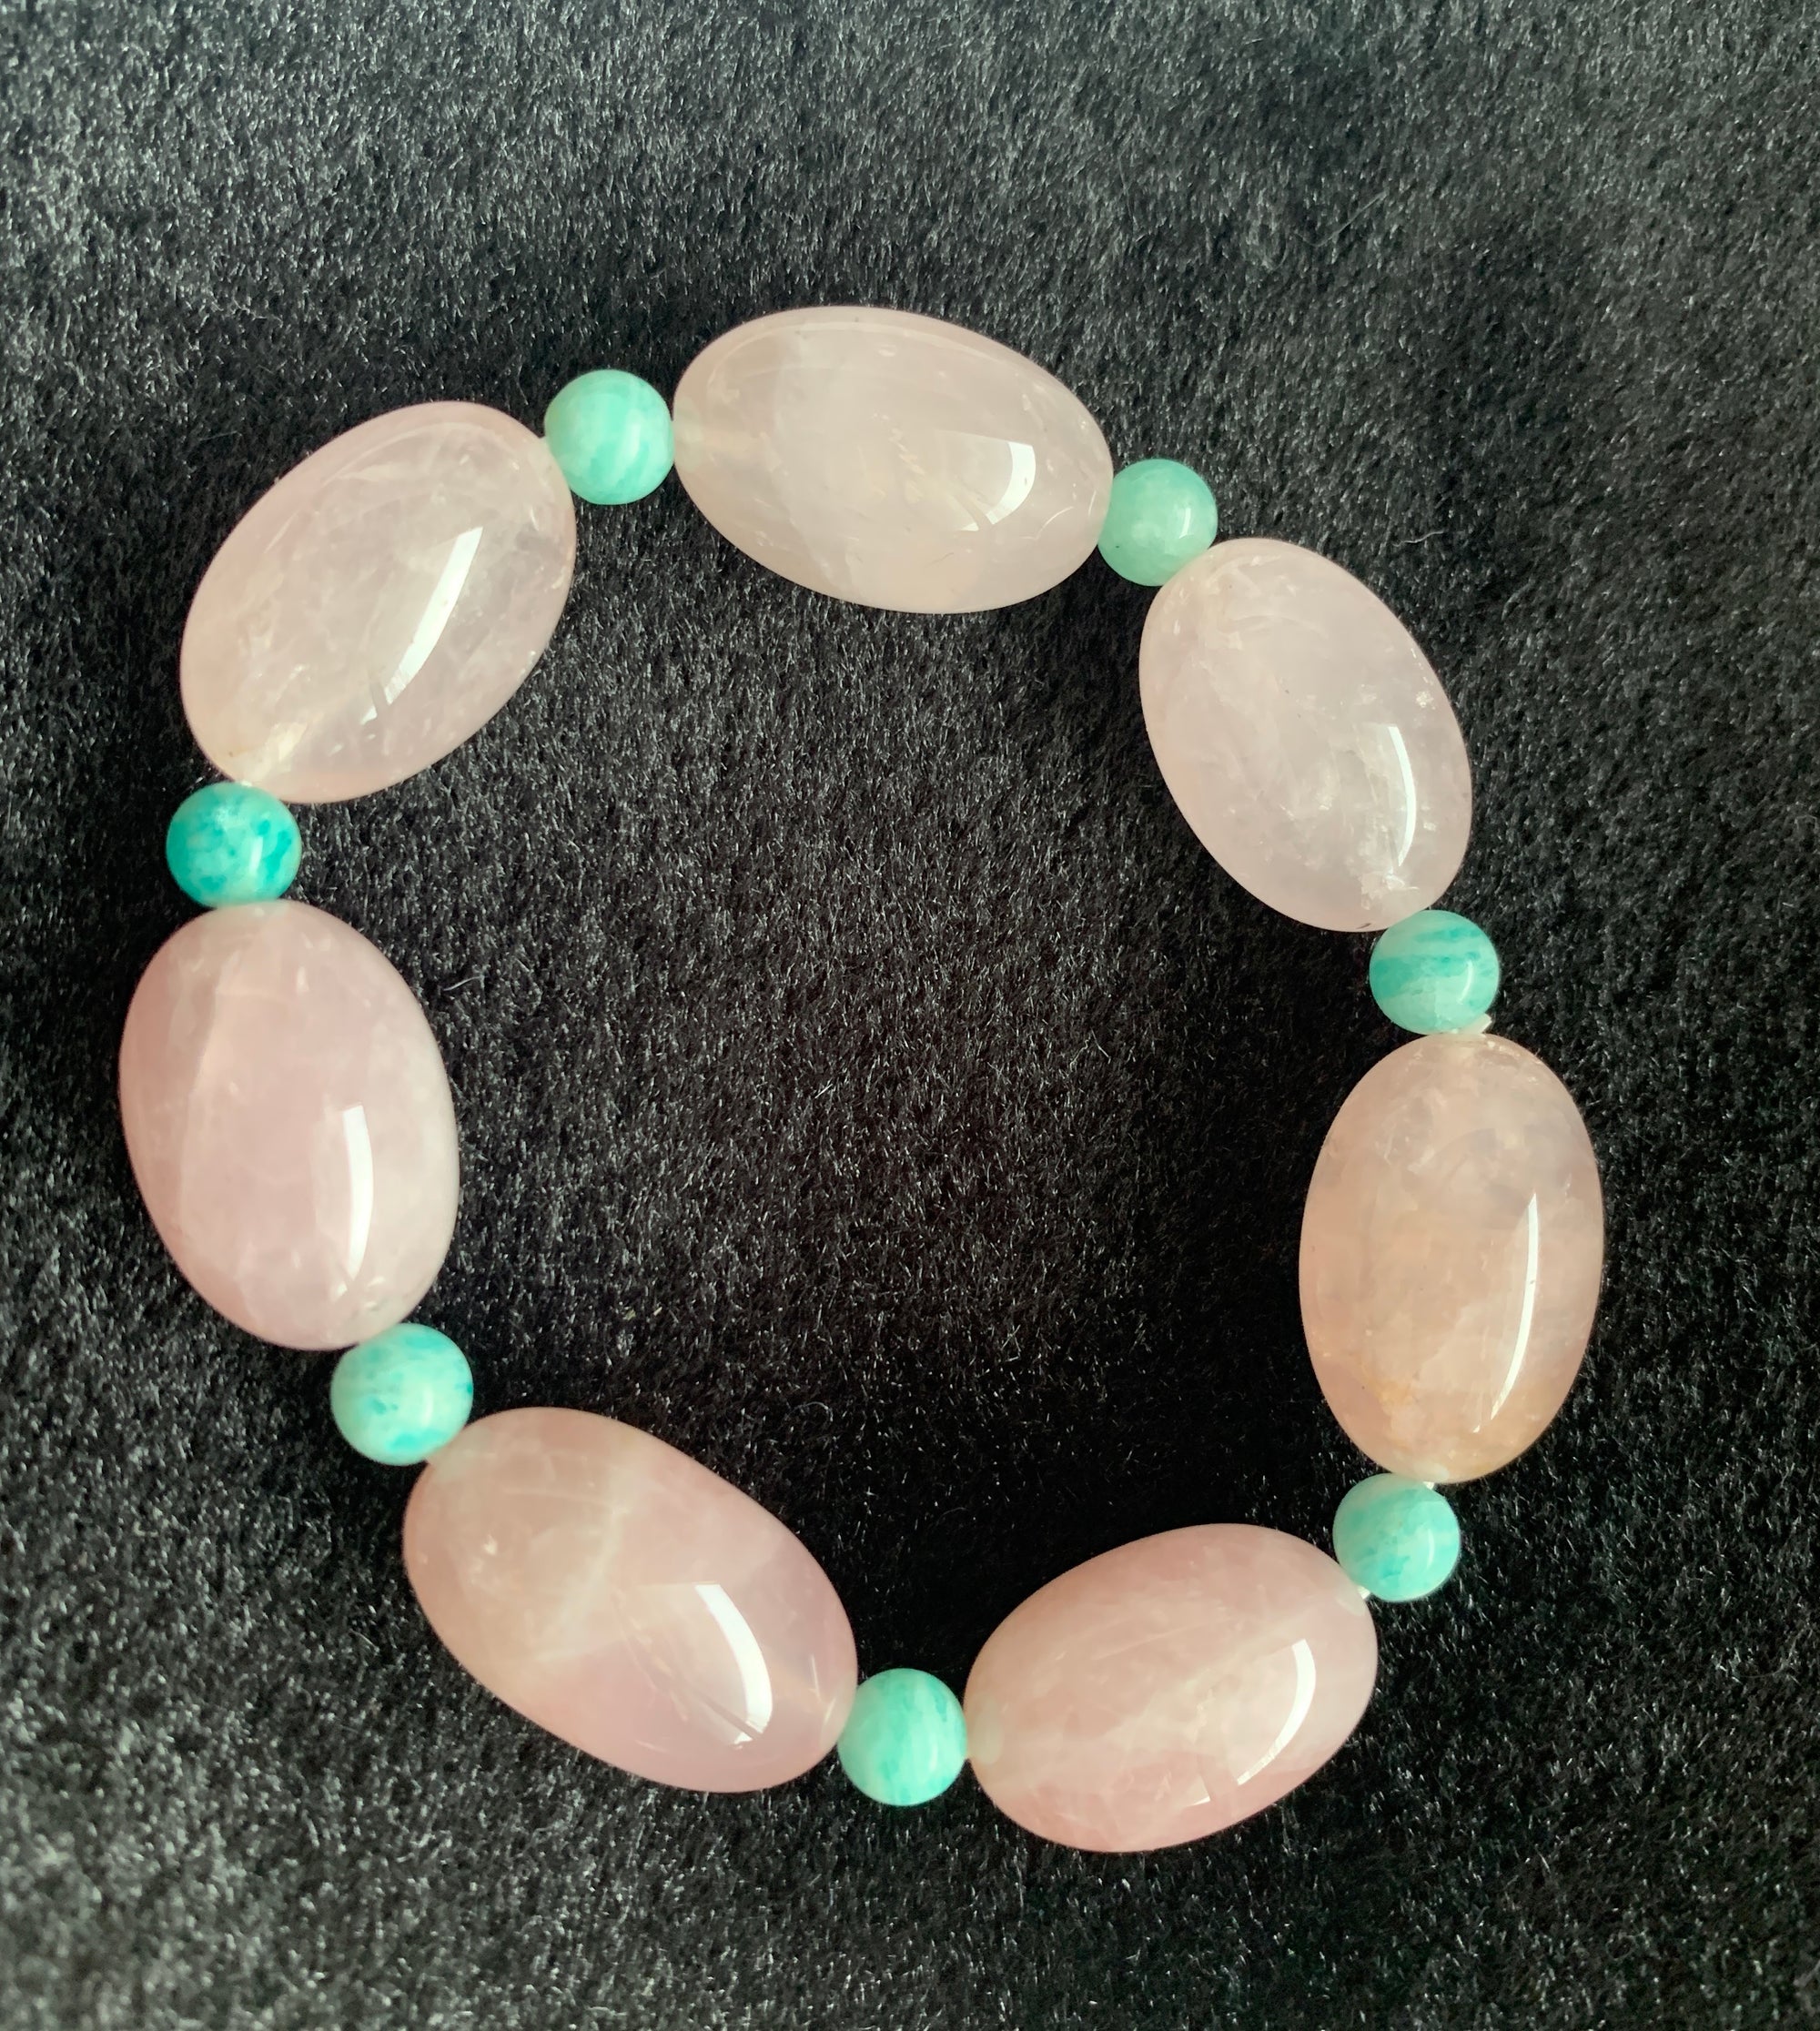 Bracelet, Large Pink Quartz barrel beads with amazonite accent beads